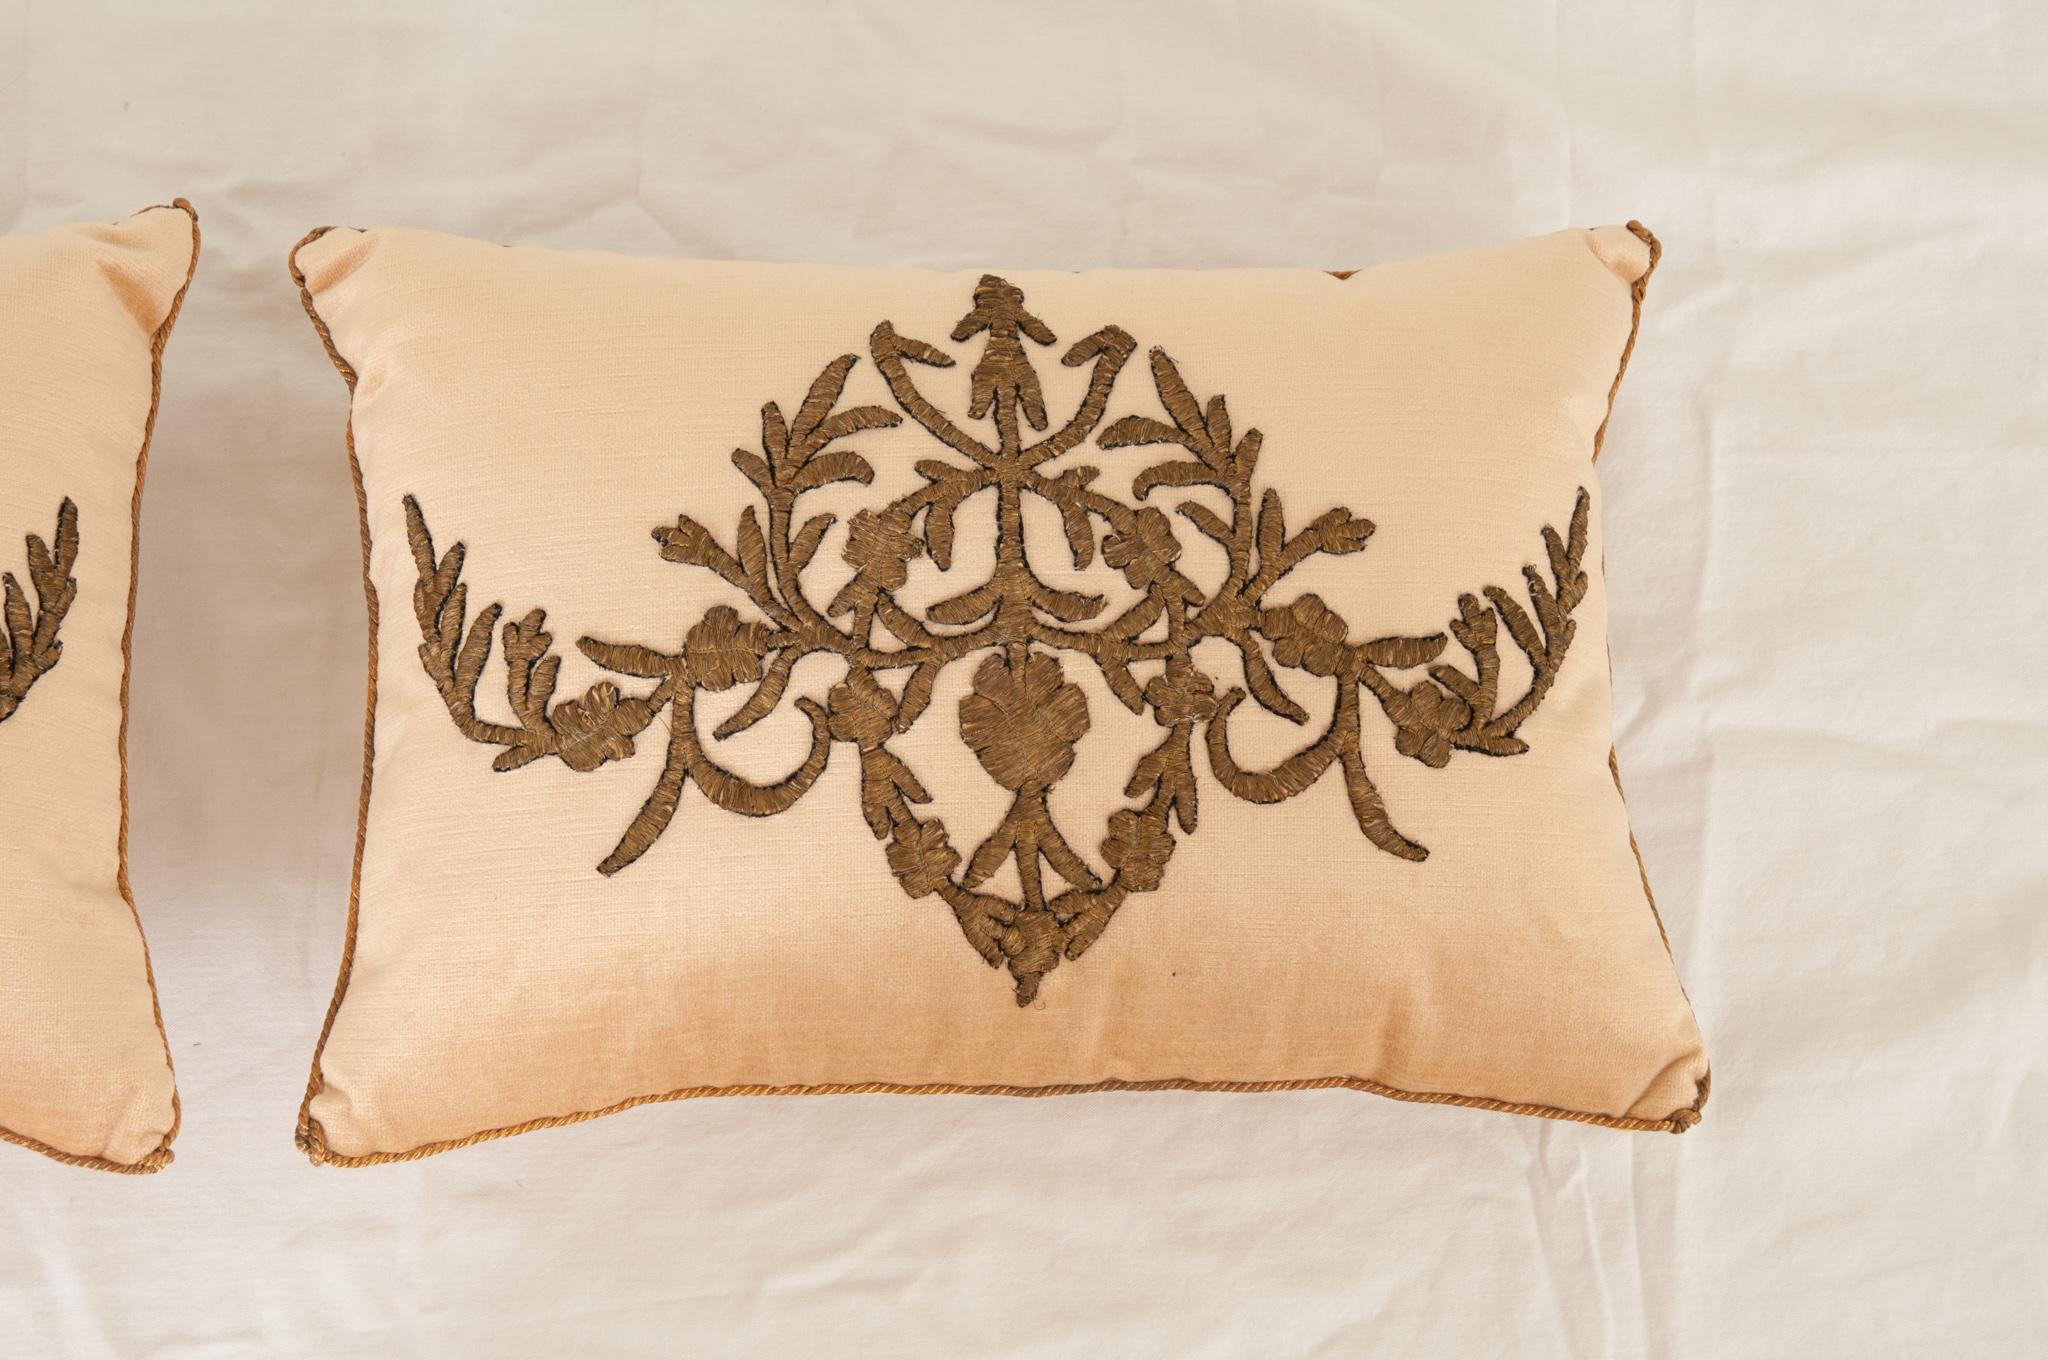 Other Pair of B.Viz Raised Metallic Embroidery Pillows